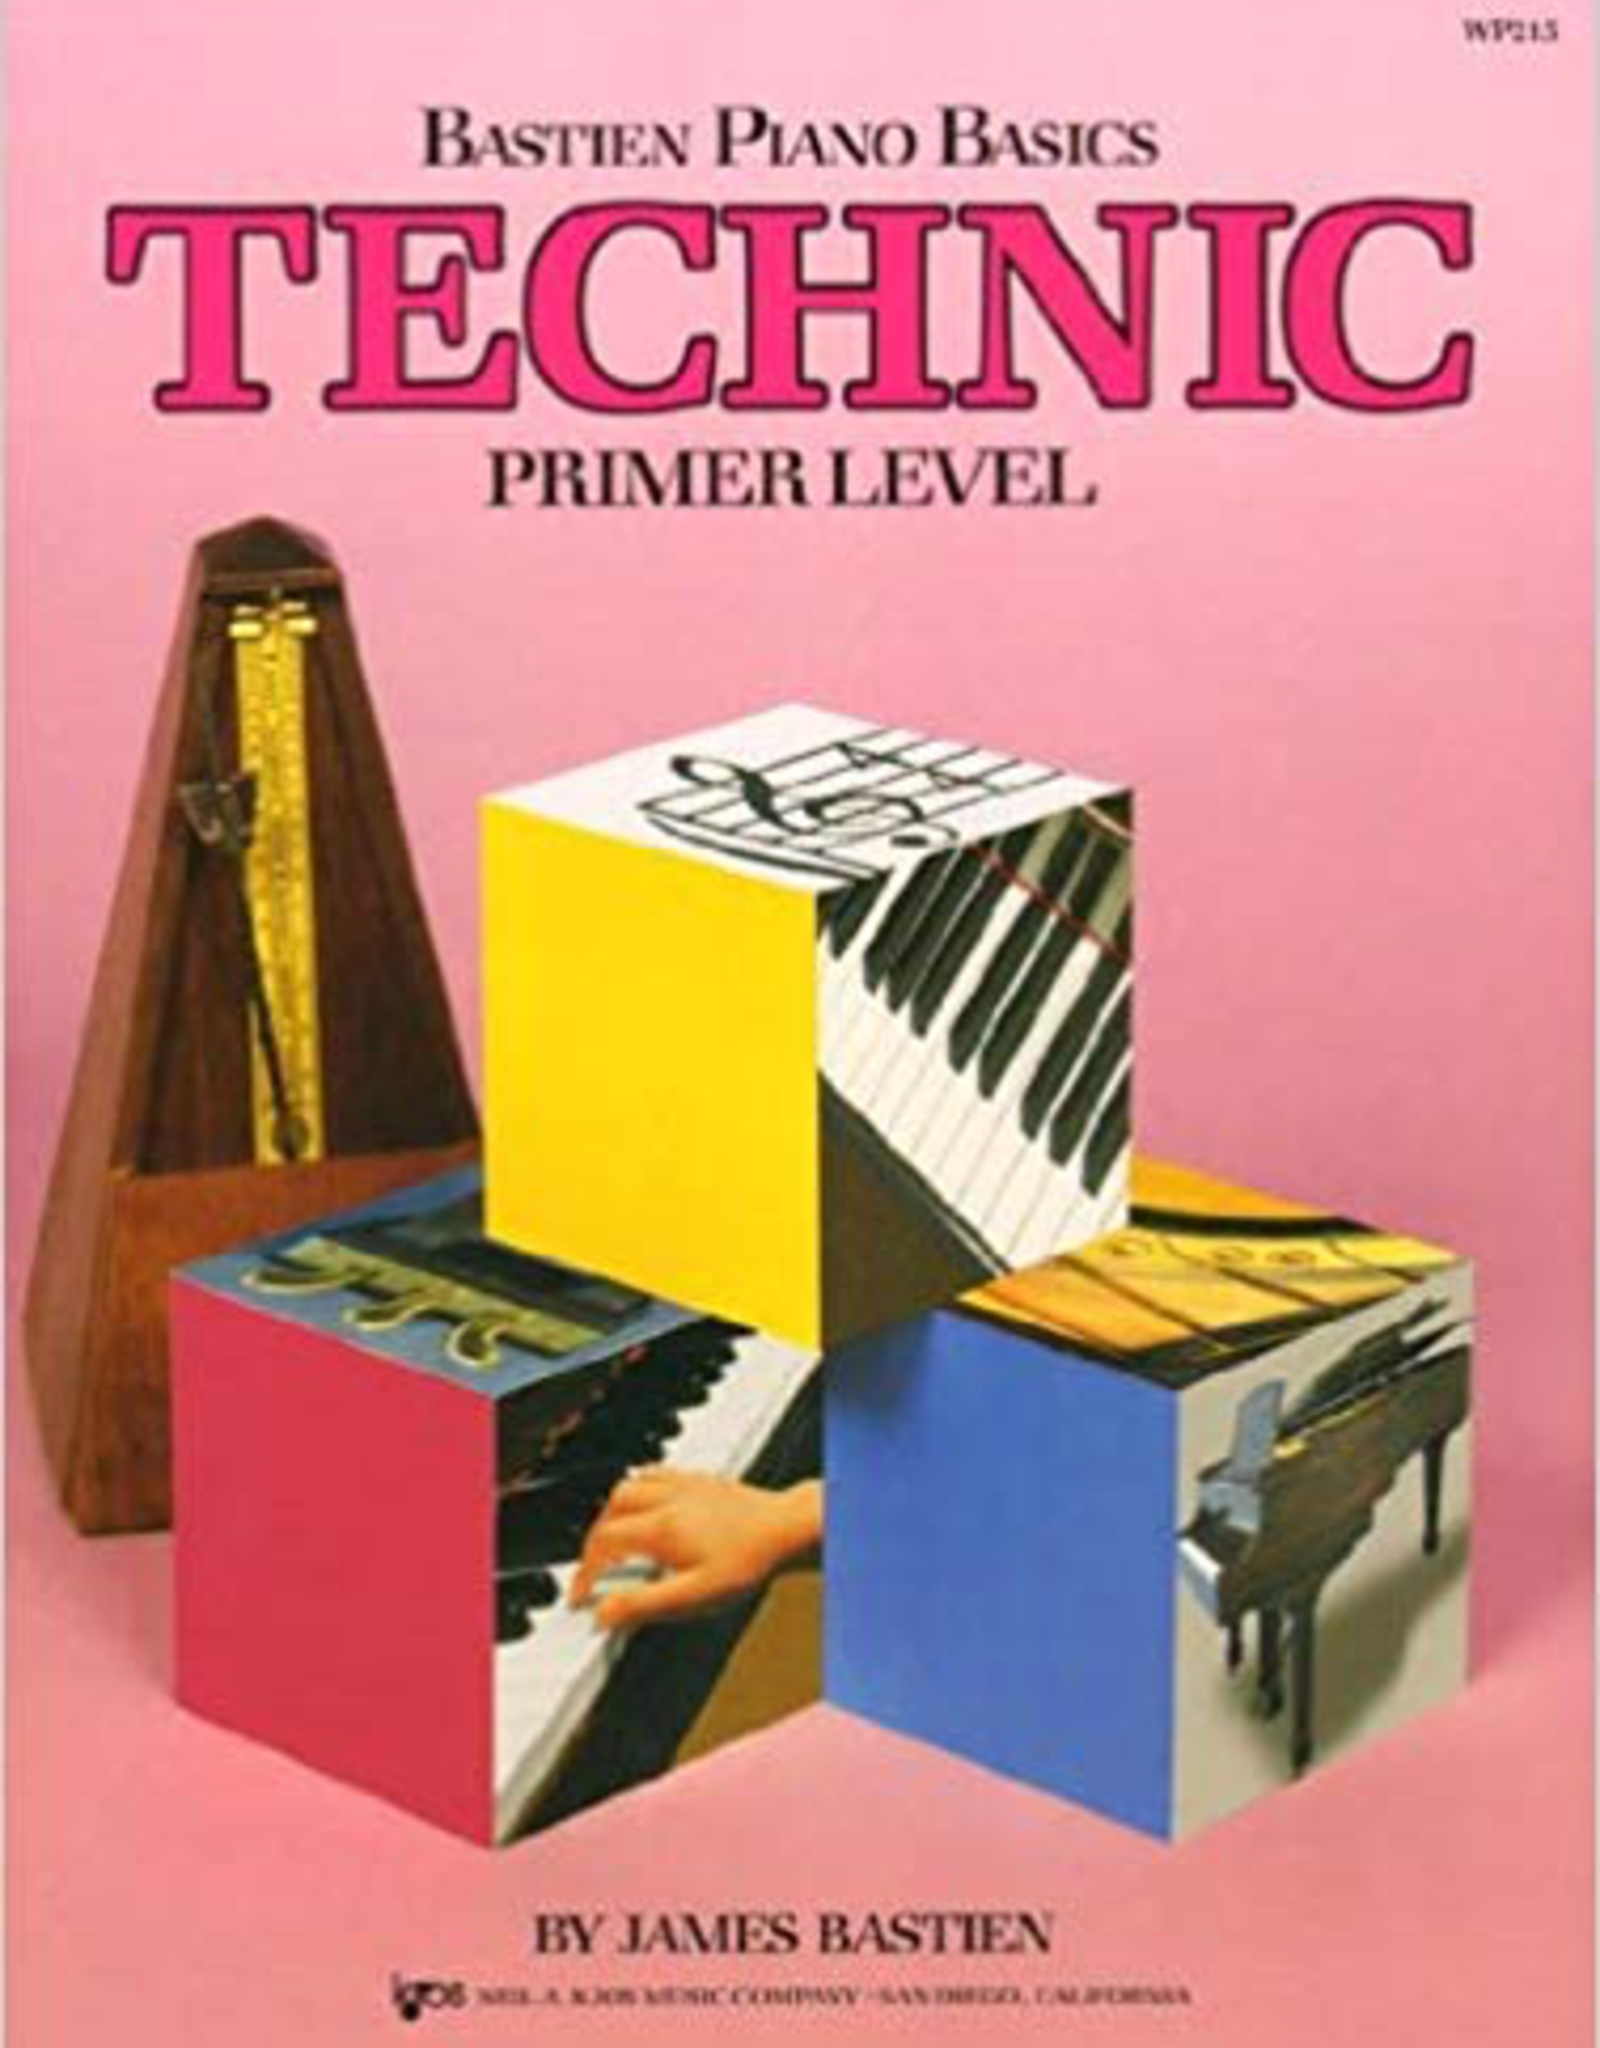 Kjos Bastien Piano Basics Technic Primer Level *